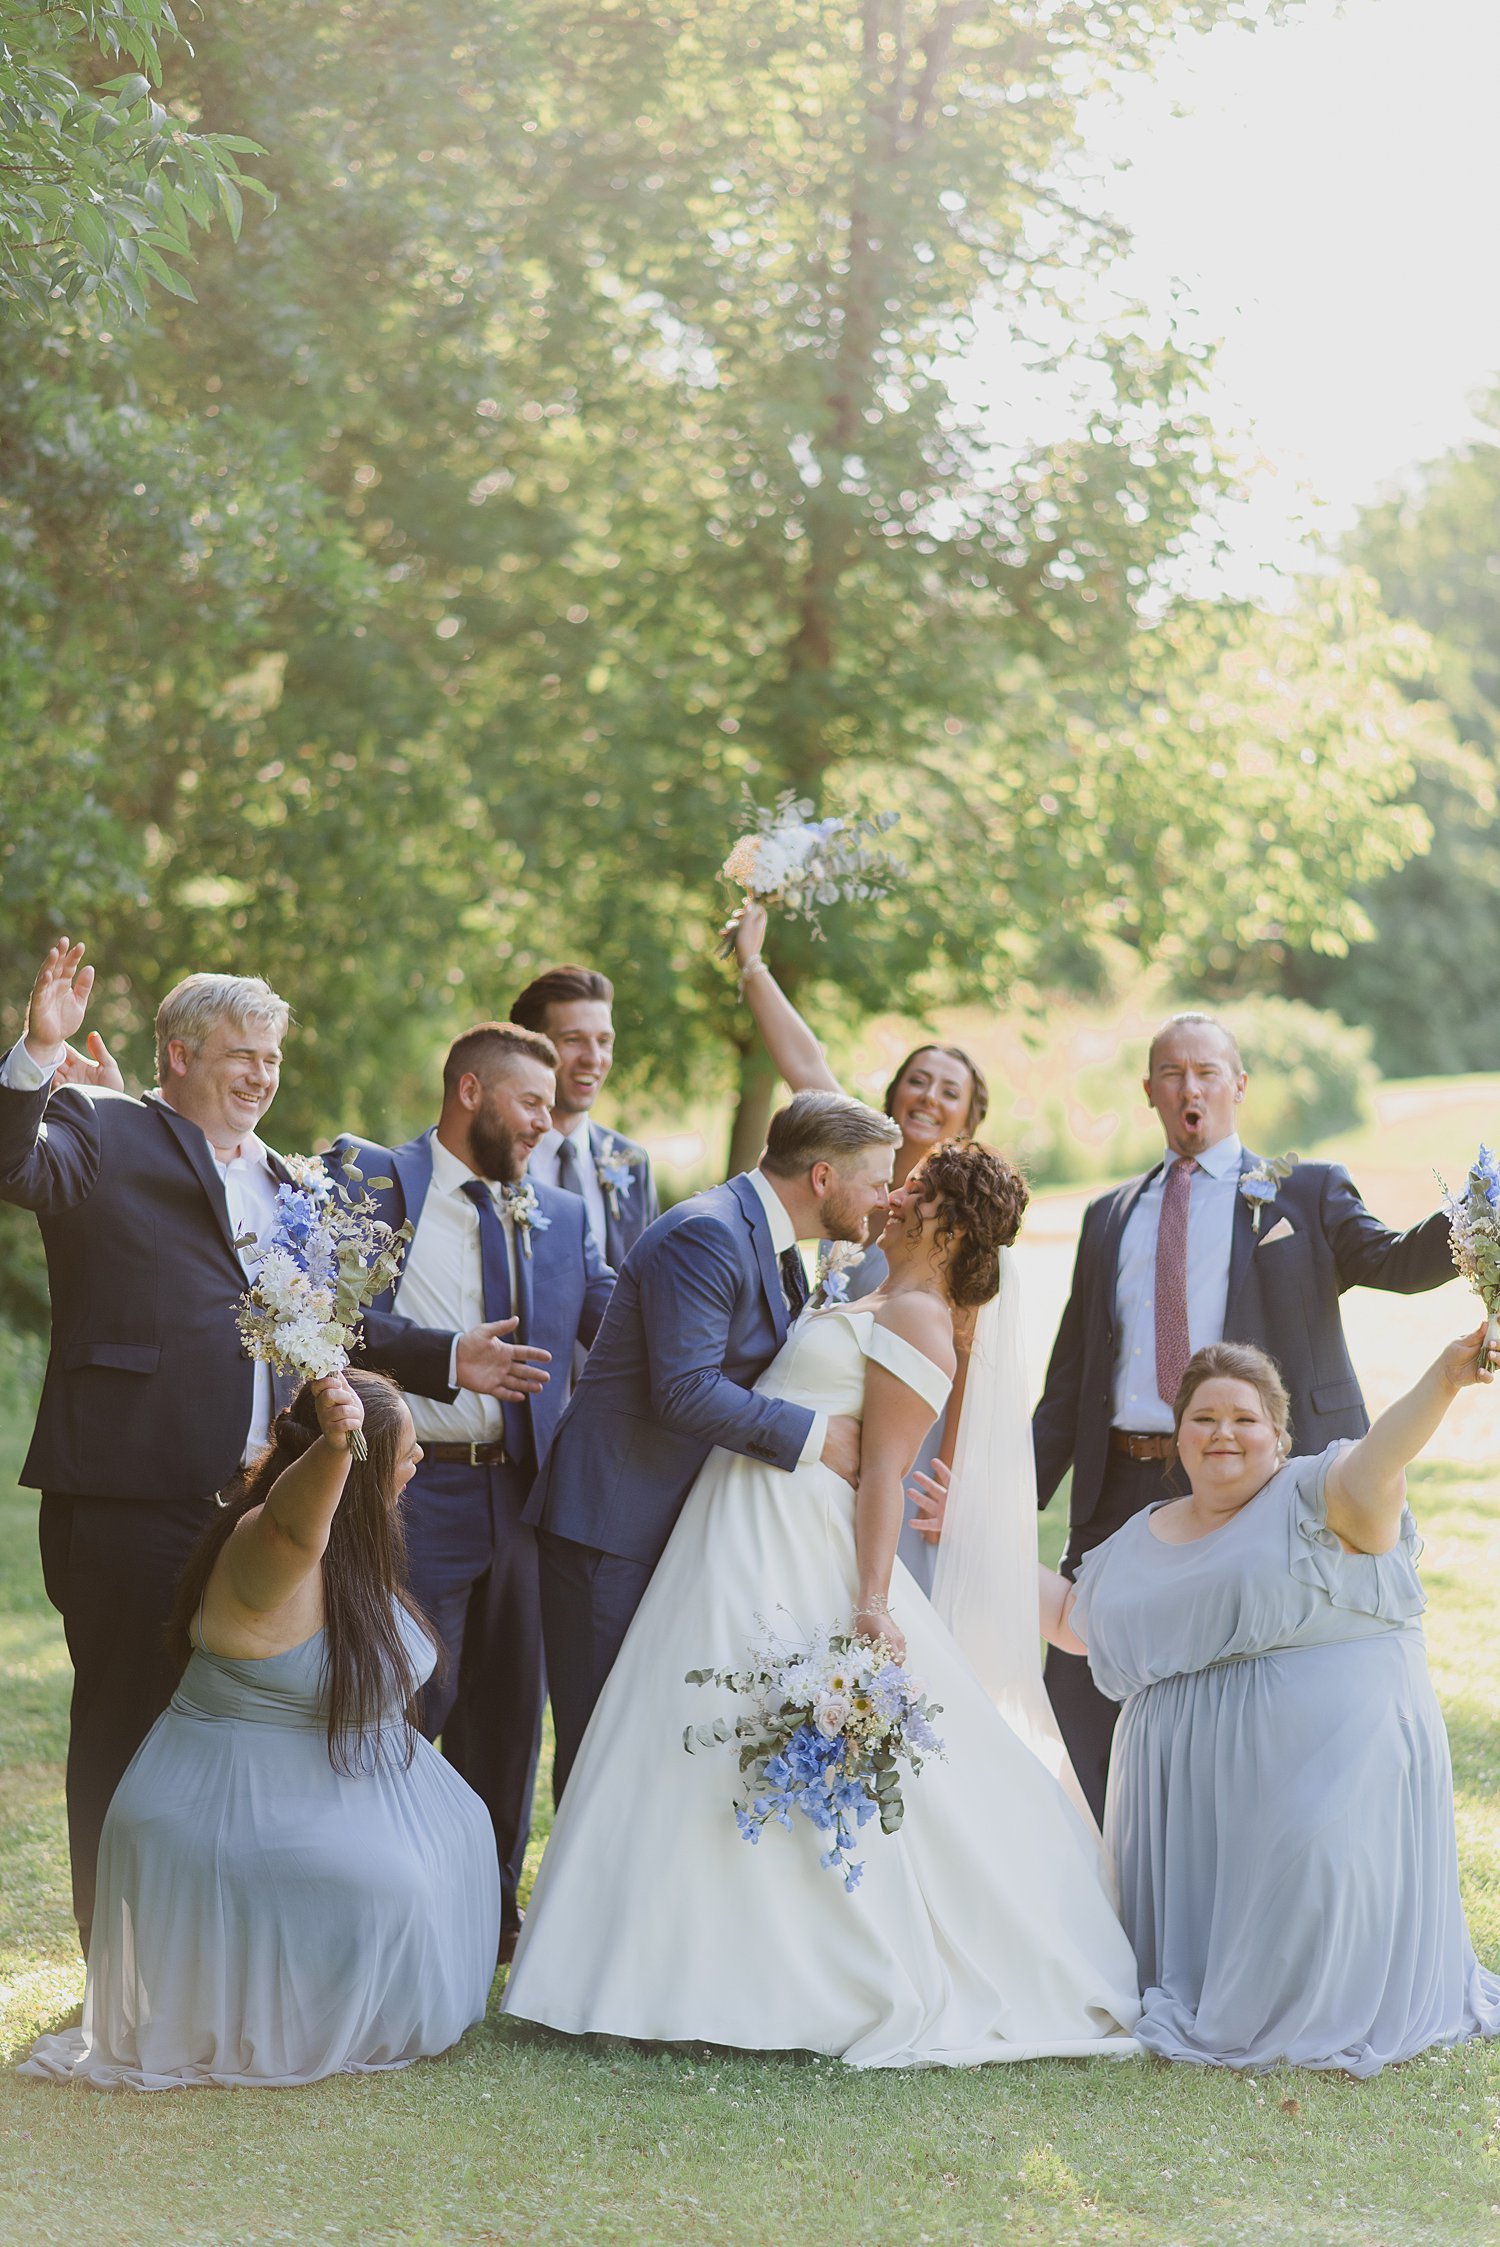 Elegant Summer Backyard Tented Wedding in Sydenham, Ontario | Prince Edward County Wedding Photographer | Holly McMurter Photographs_0070.jpg